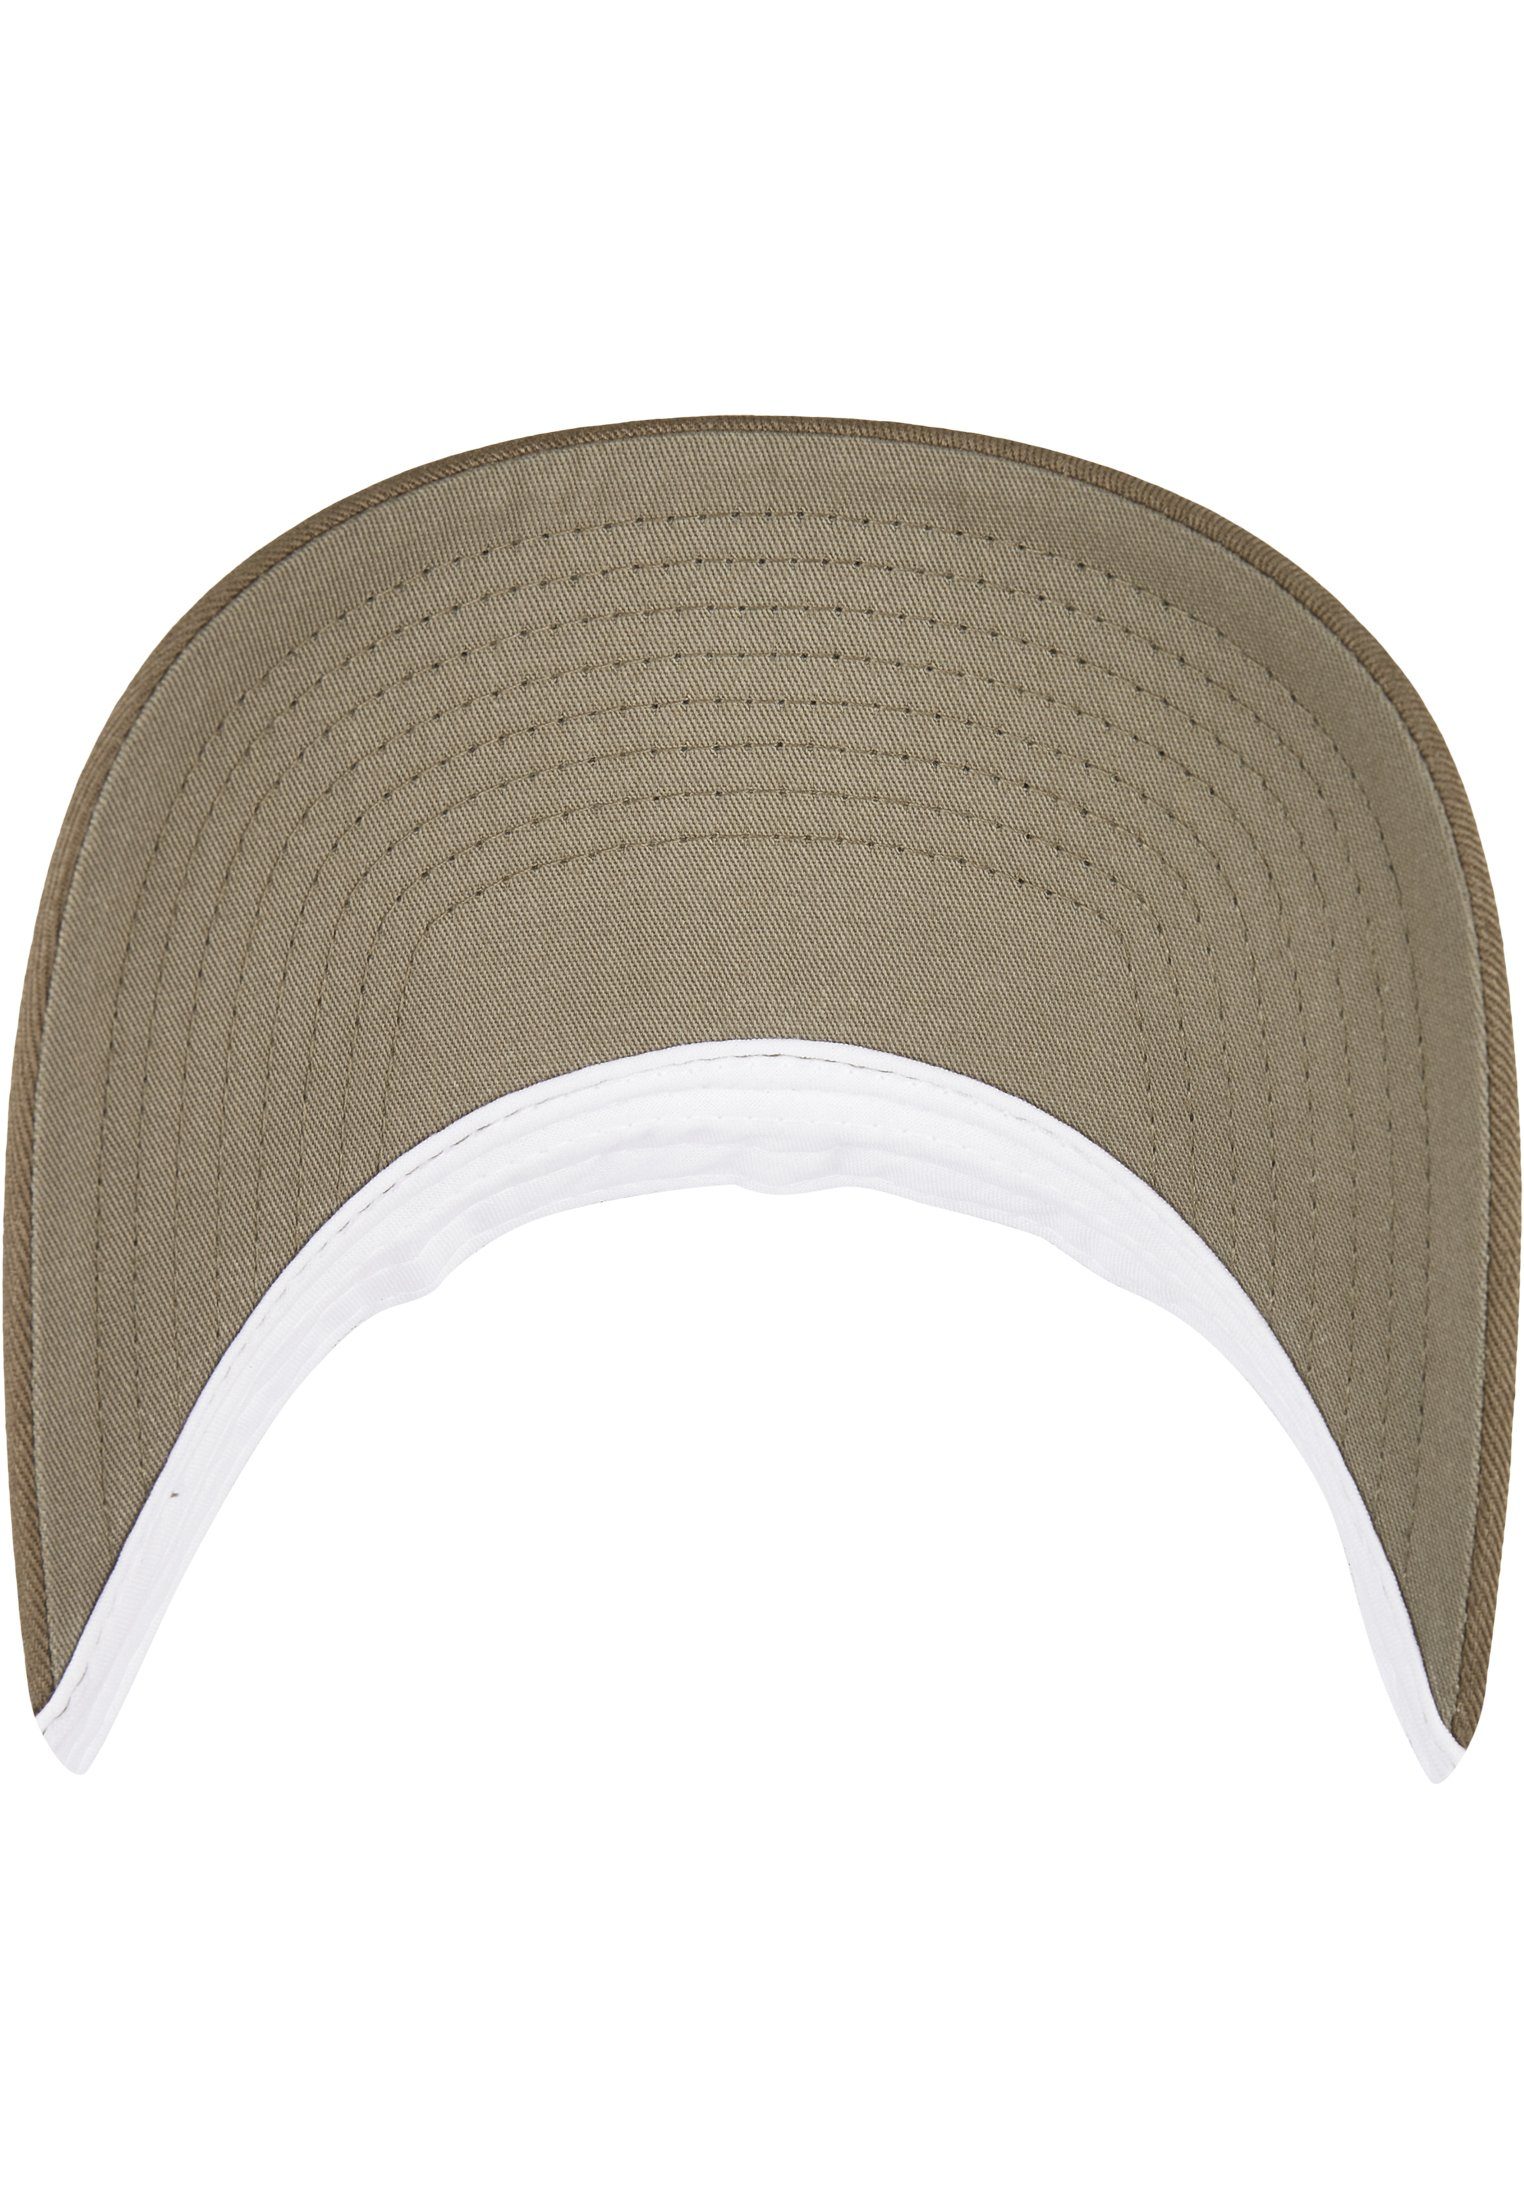 CAP Flexfit RETRO CLASSICS 2-TONE olive/white Caps Cap RECYCLED Flex TRUCKER YP